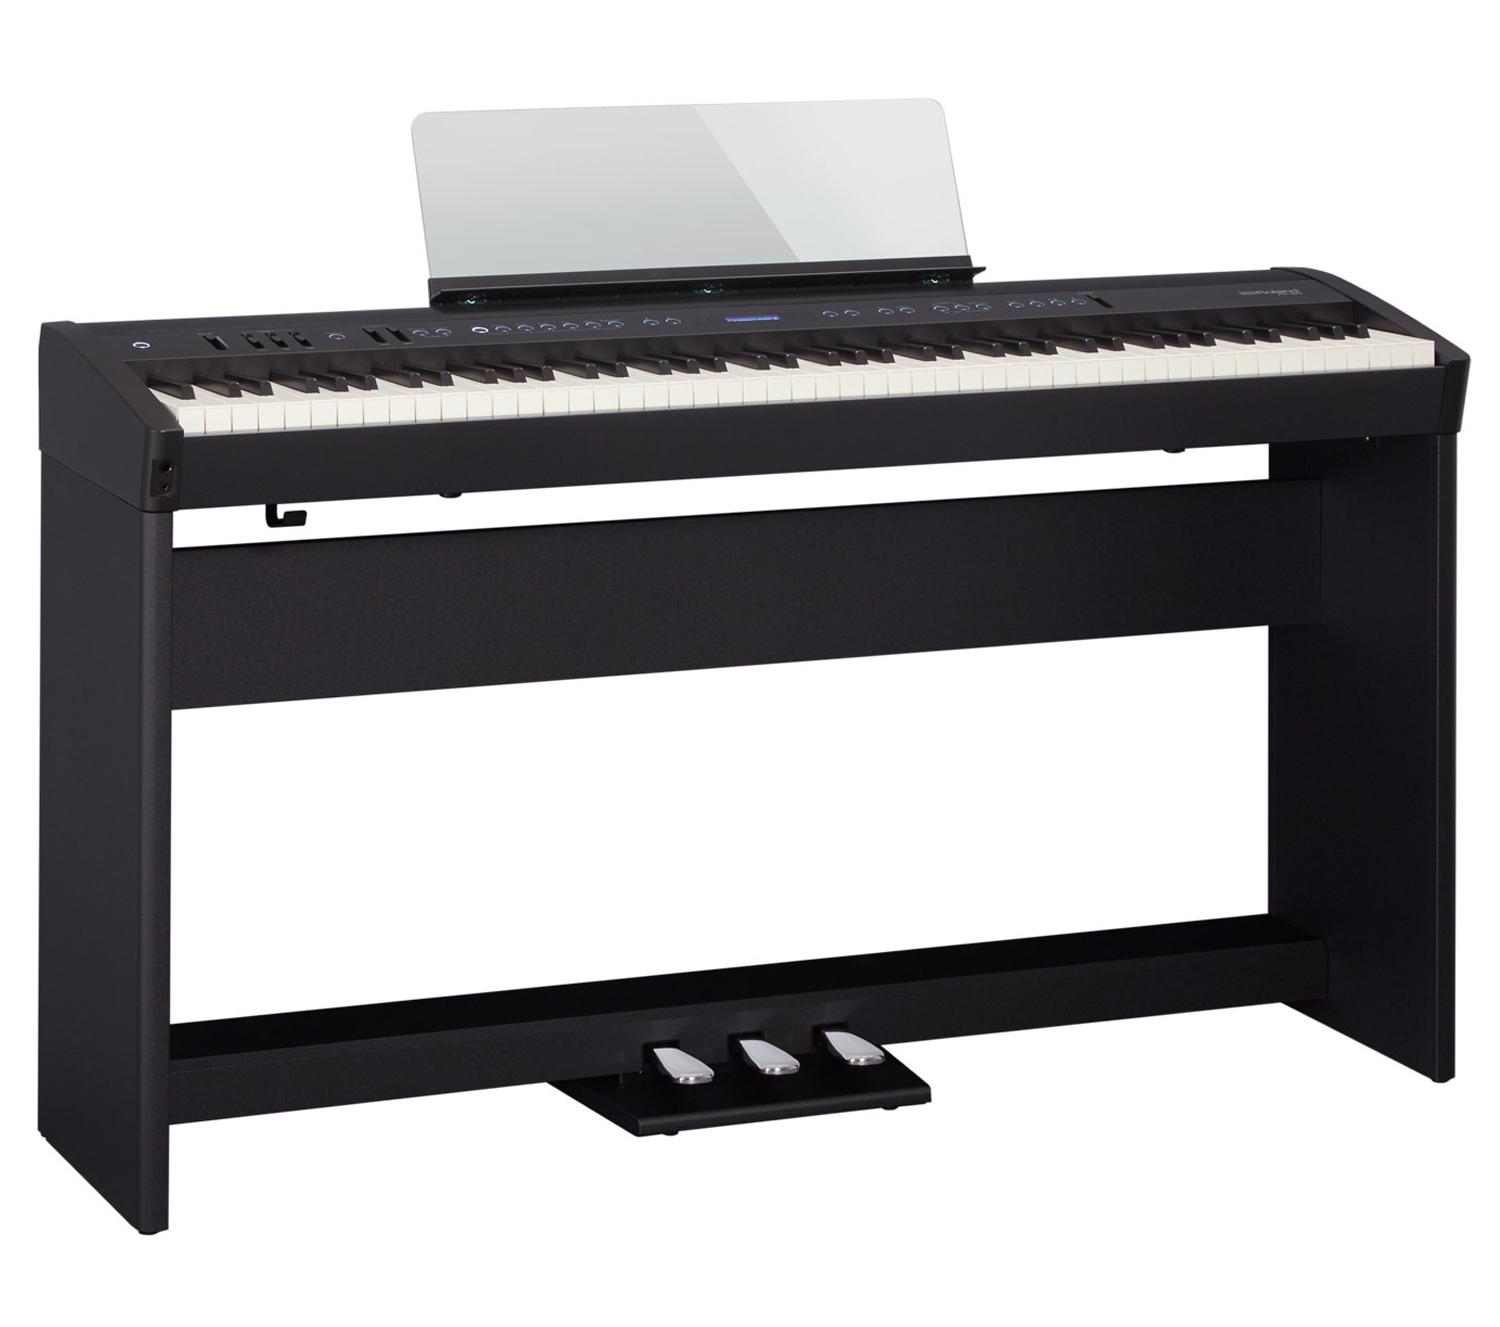 Цифровое пианино Roland FP-60-BK